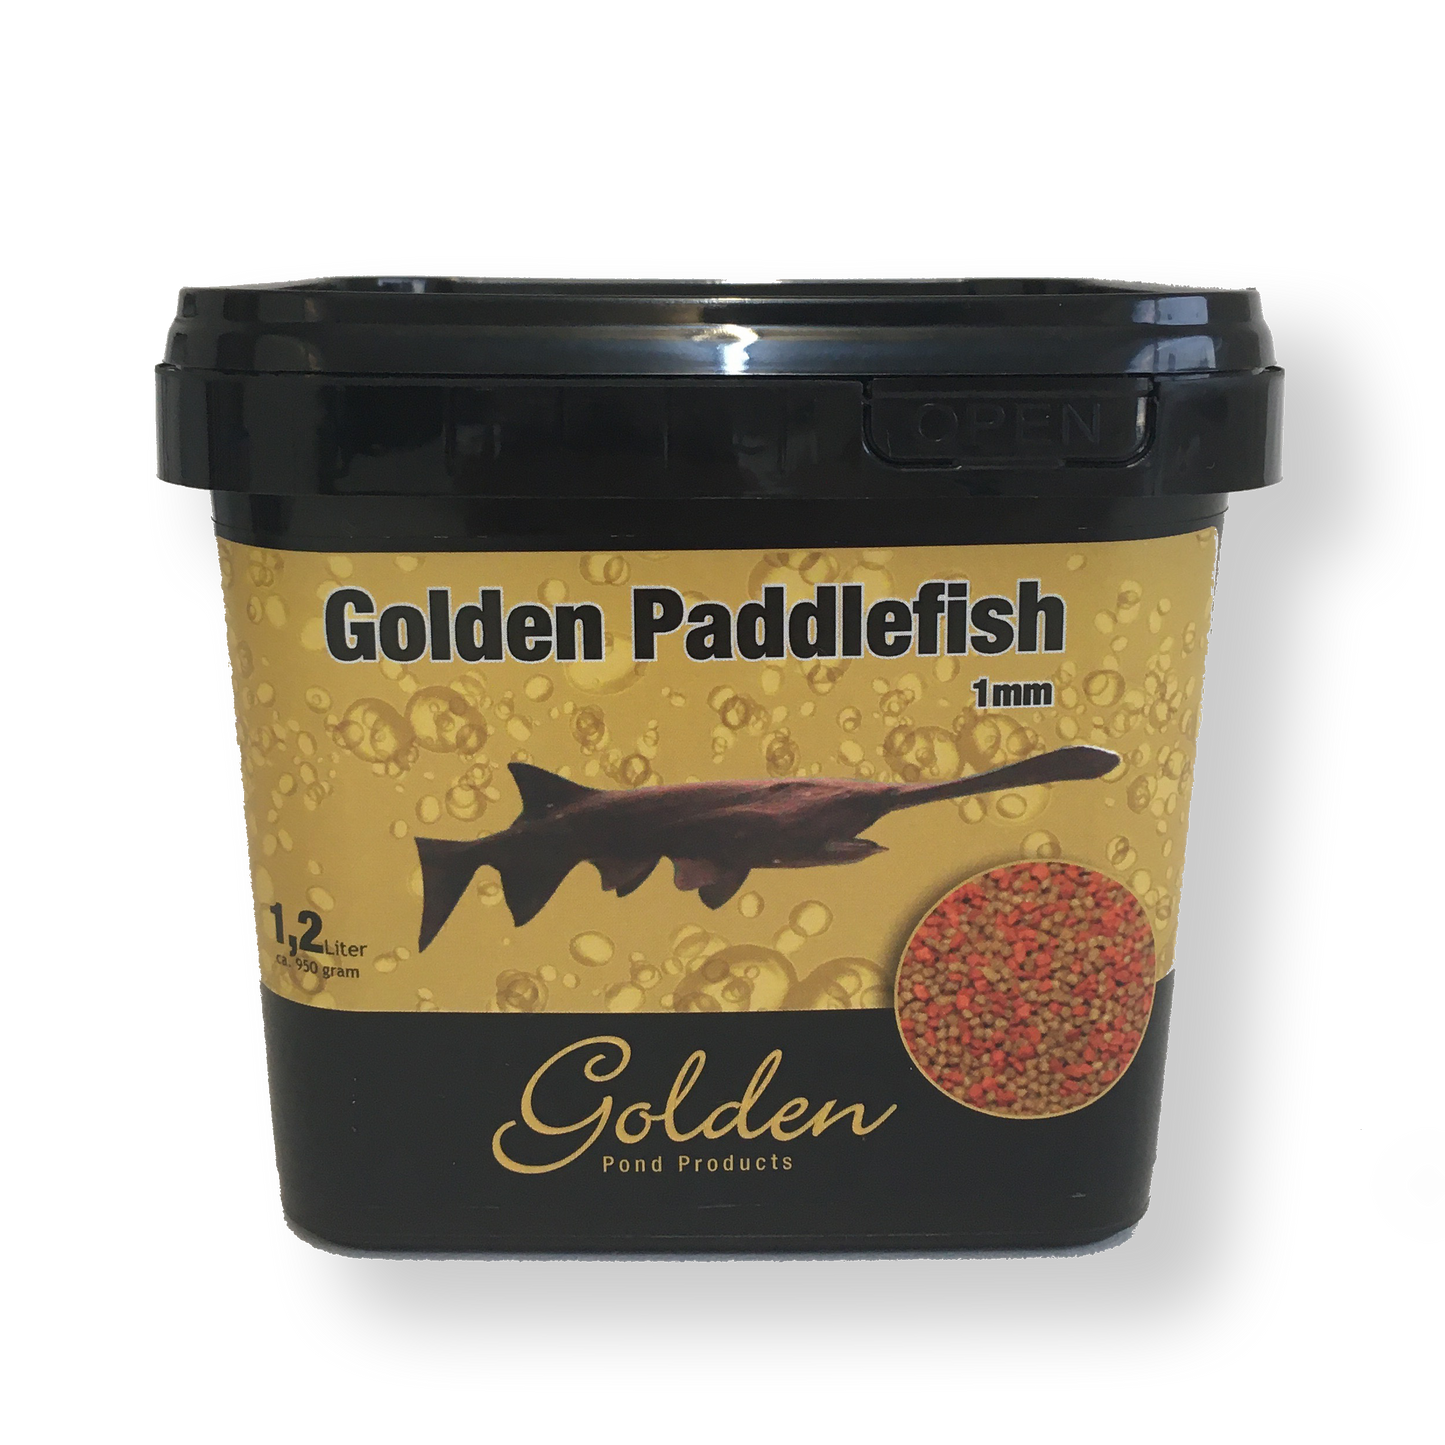 Golden Paddlefish